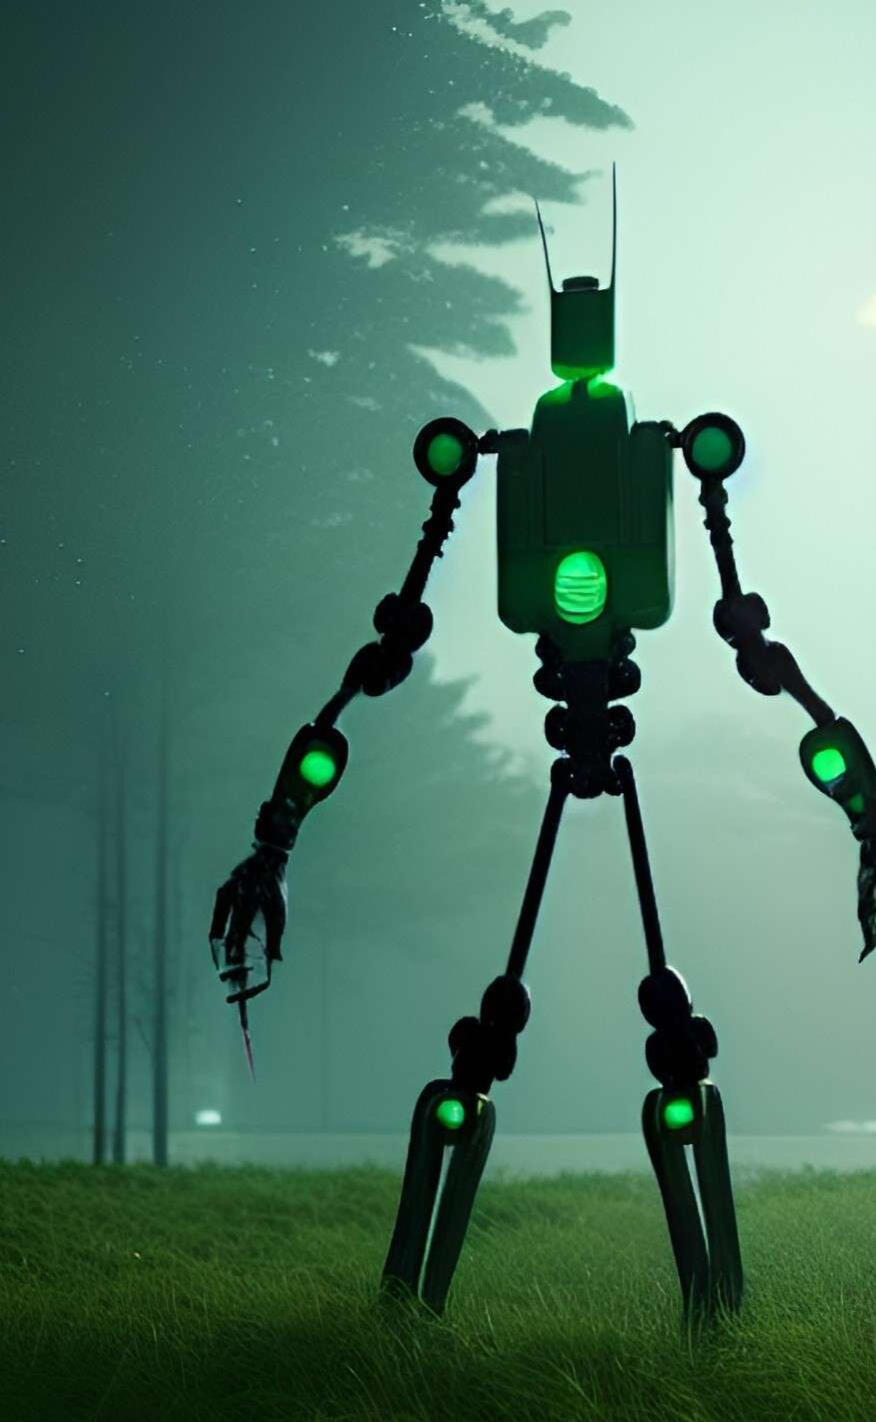 A tall green robot in a foggy field